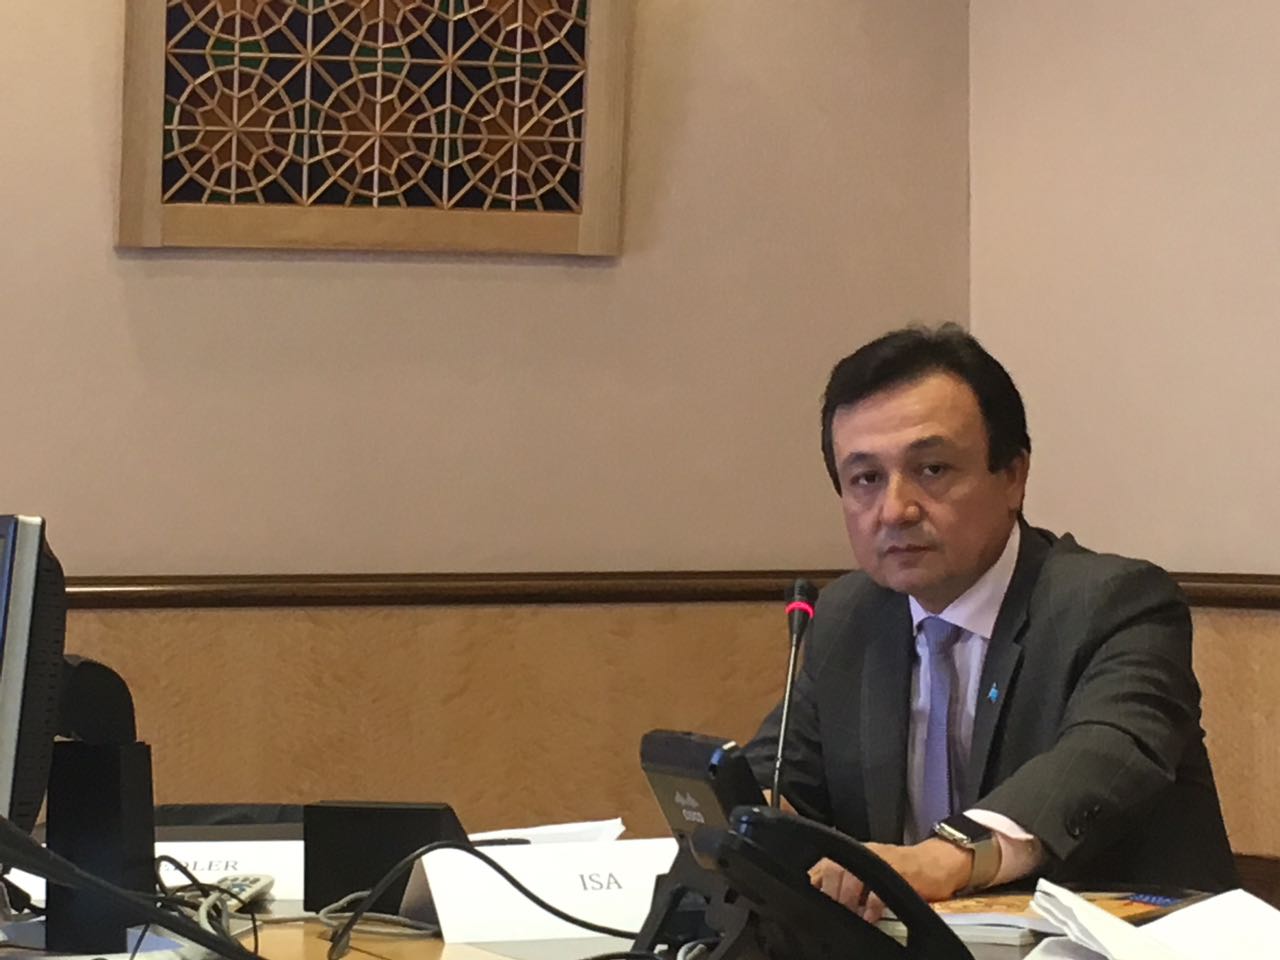 Dolkun Isa Speaks at UN Side-Event: “UN Participation Challenges”